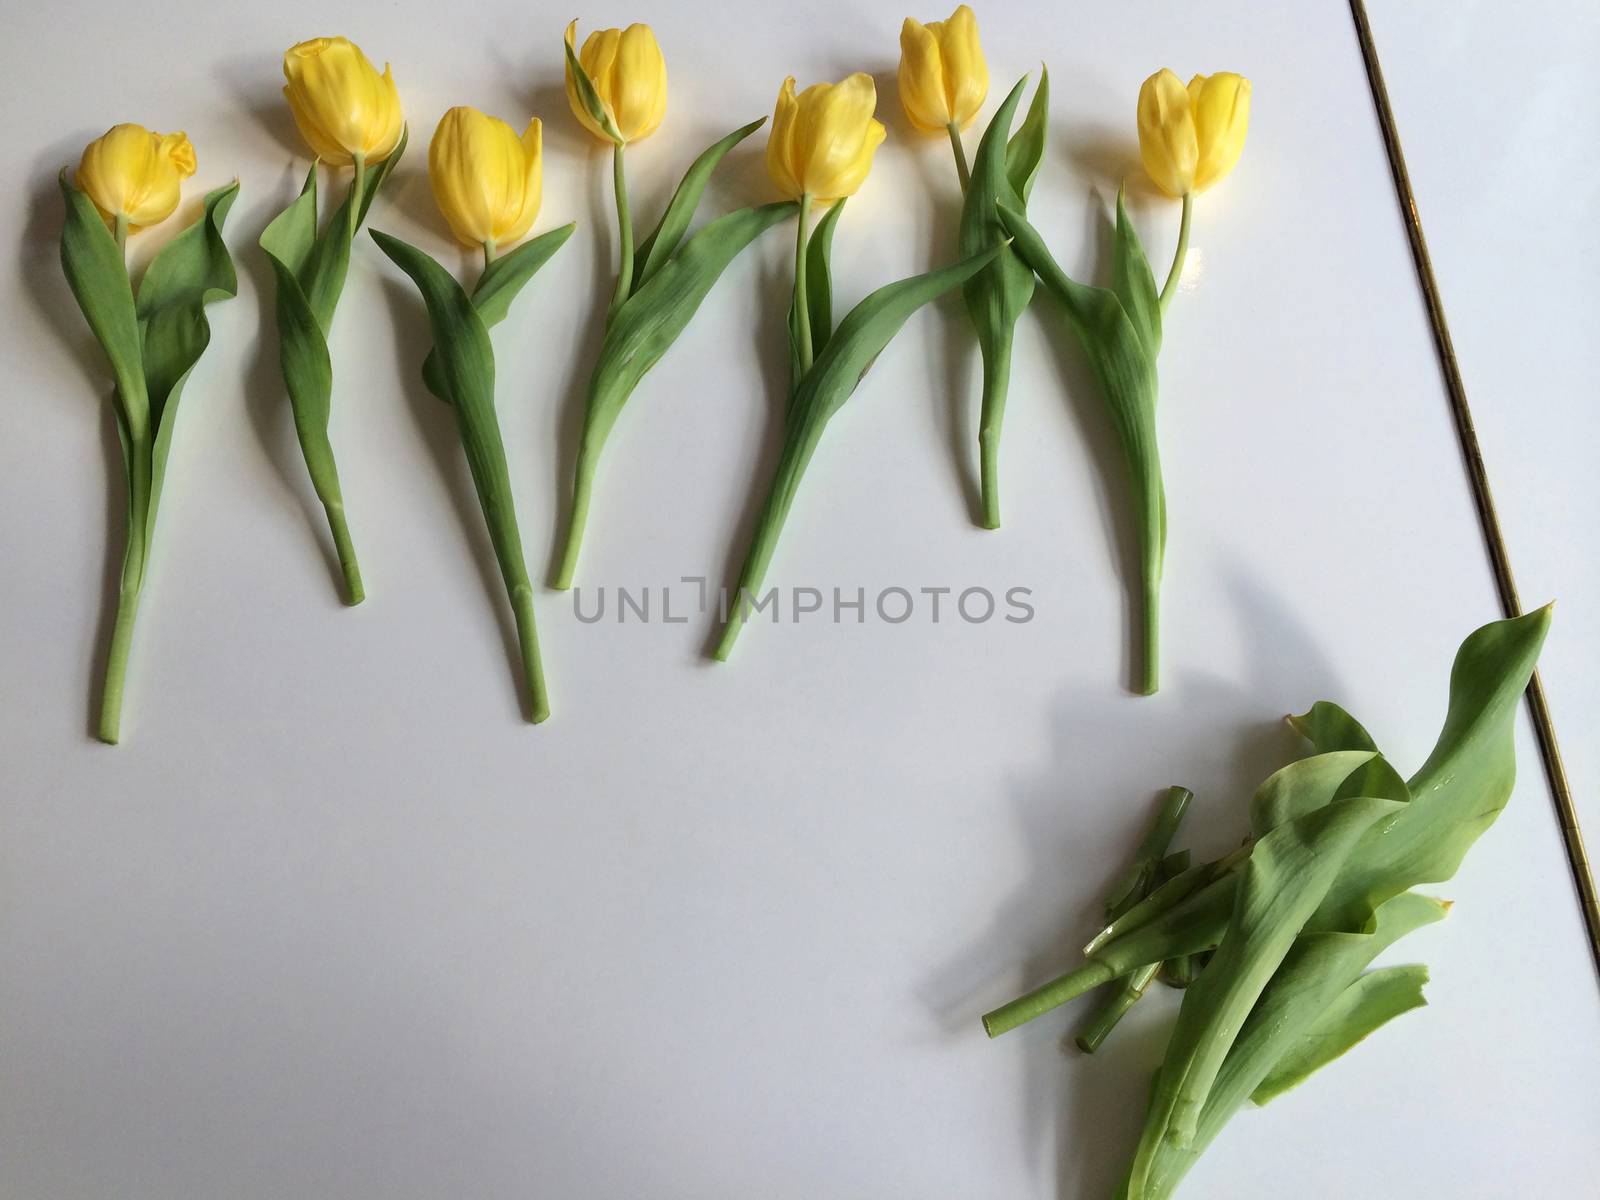 Yellow tulips by mmm